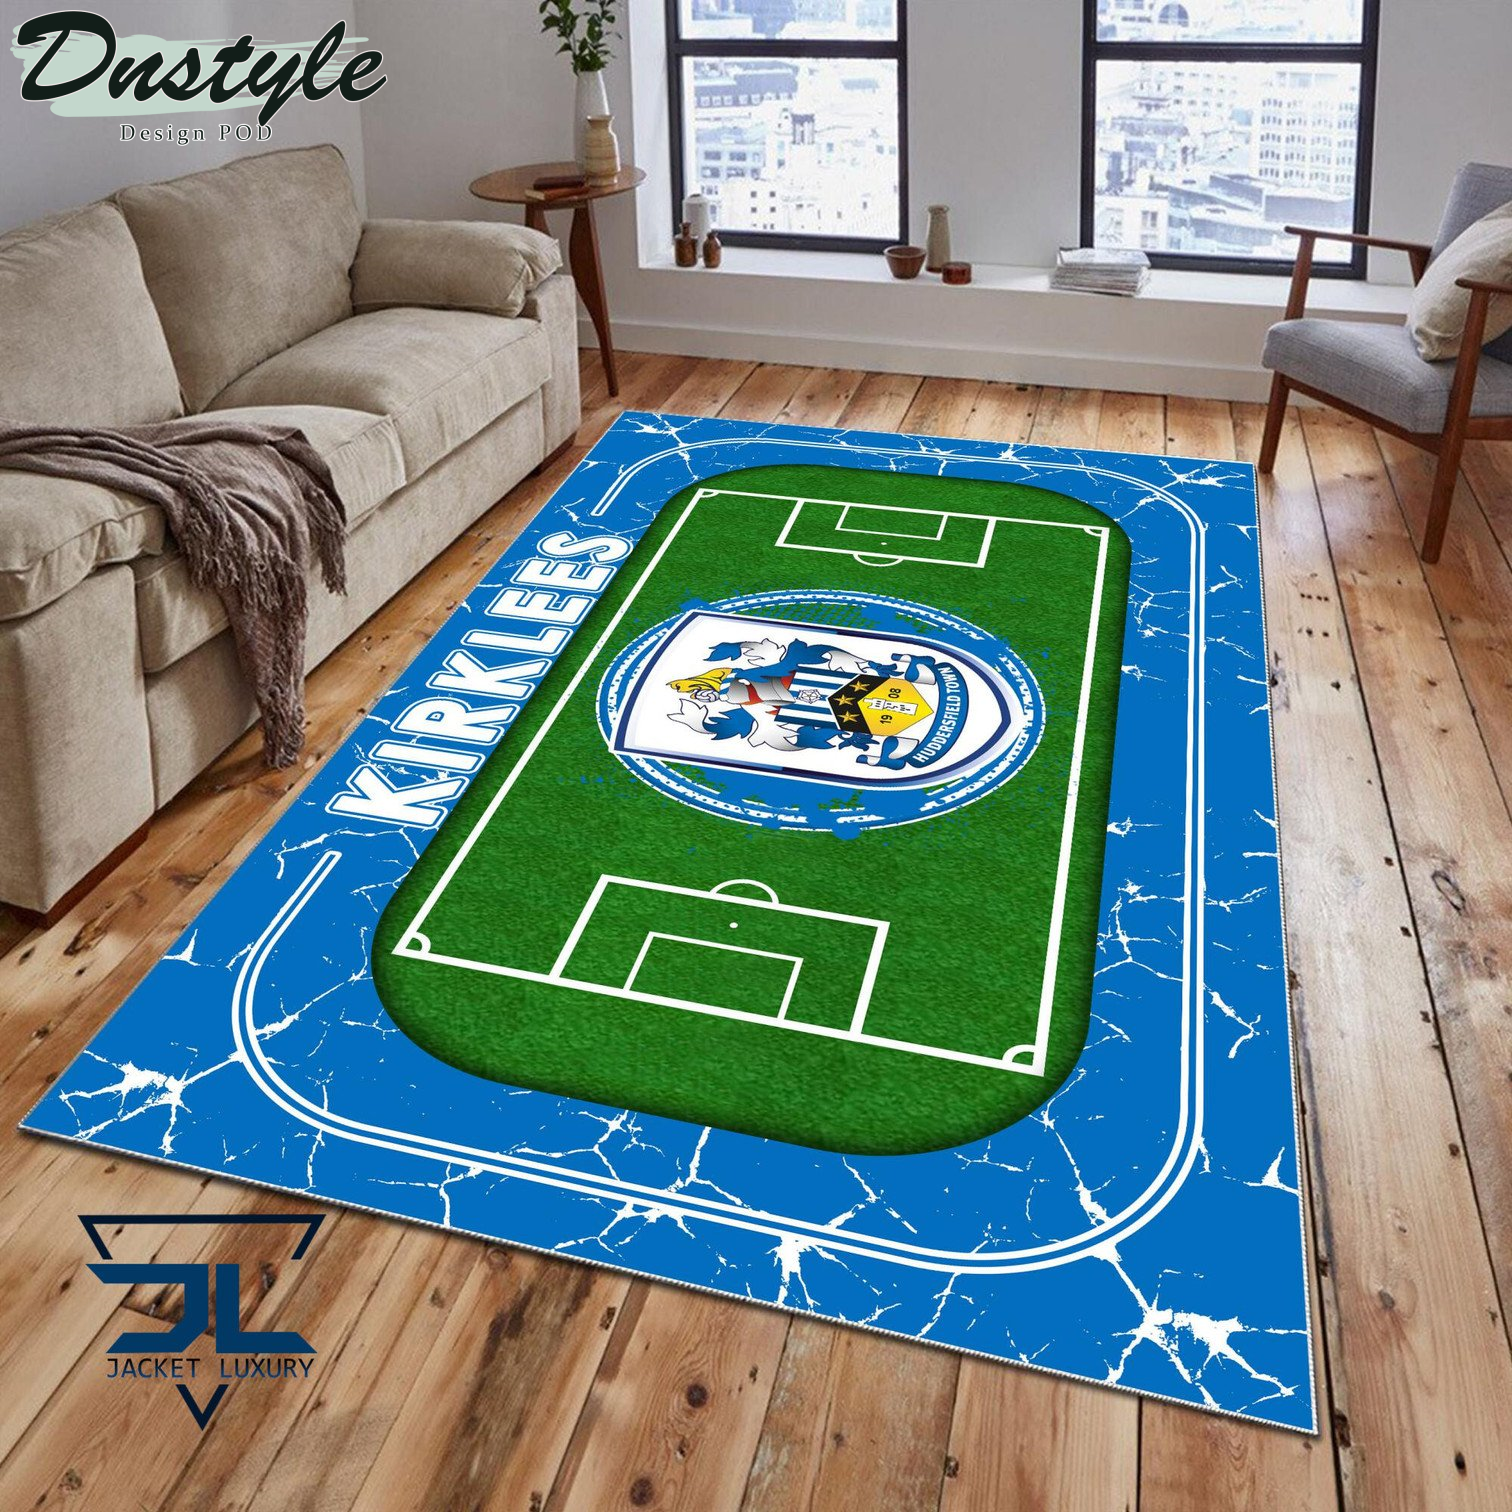 Huddersfield Town A.F.C Rug Carpet